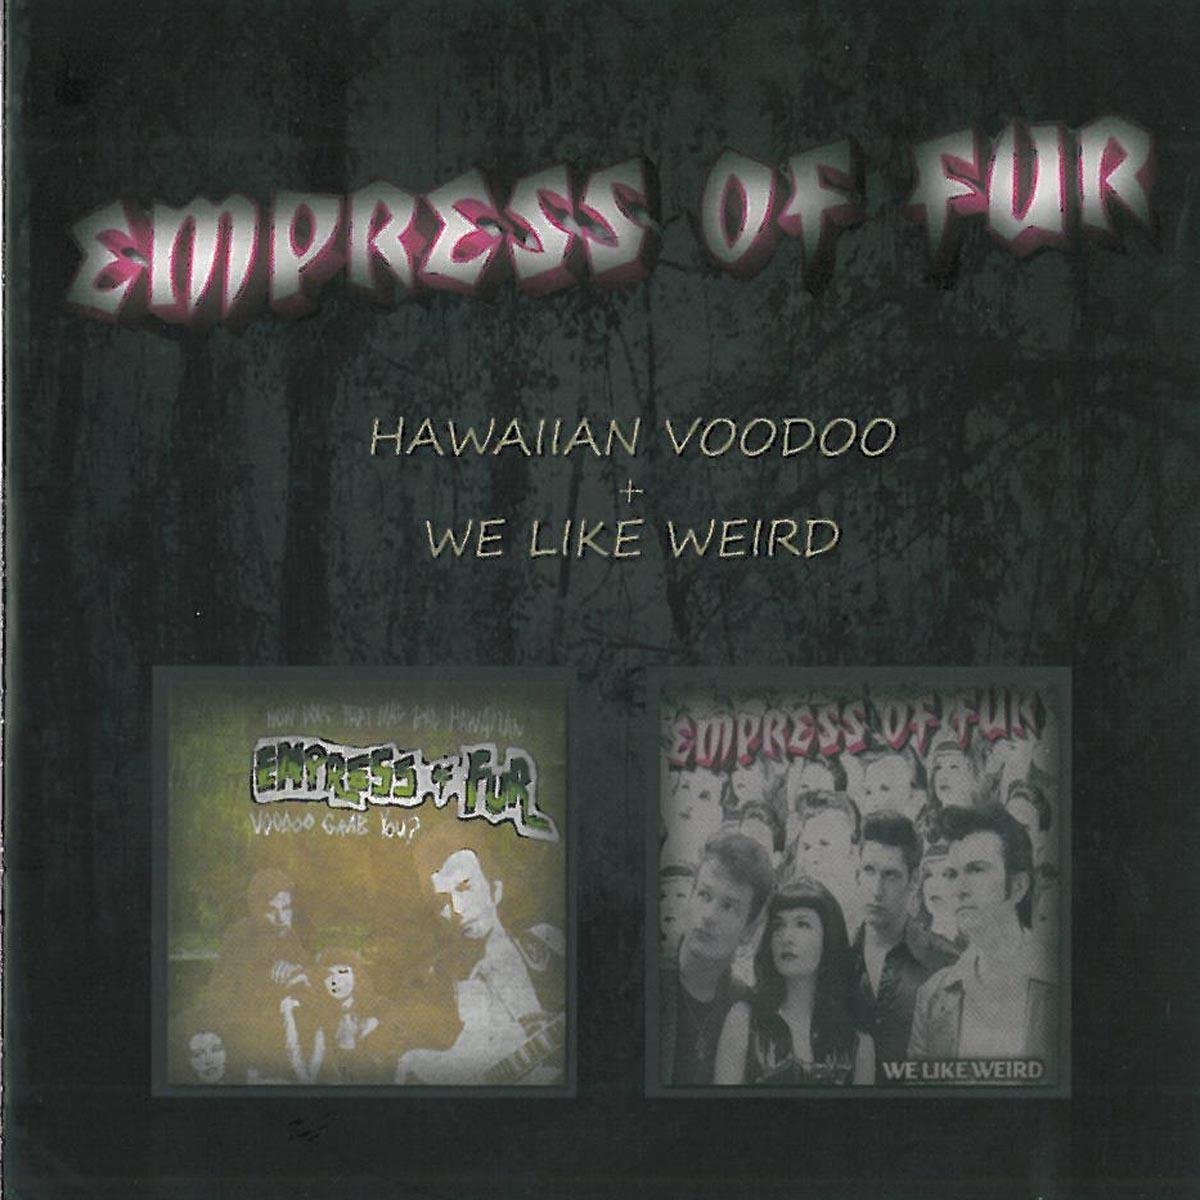 Empress Of Für - Hawaiian Voodoo + We Like Weird (CD) - Empress Of Fur